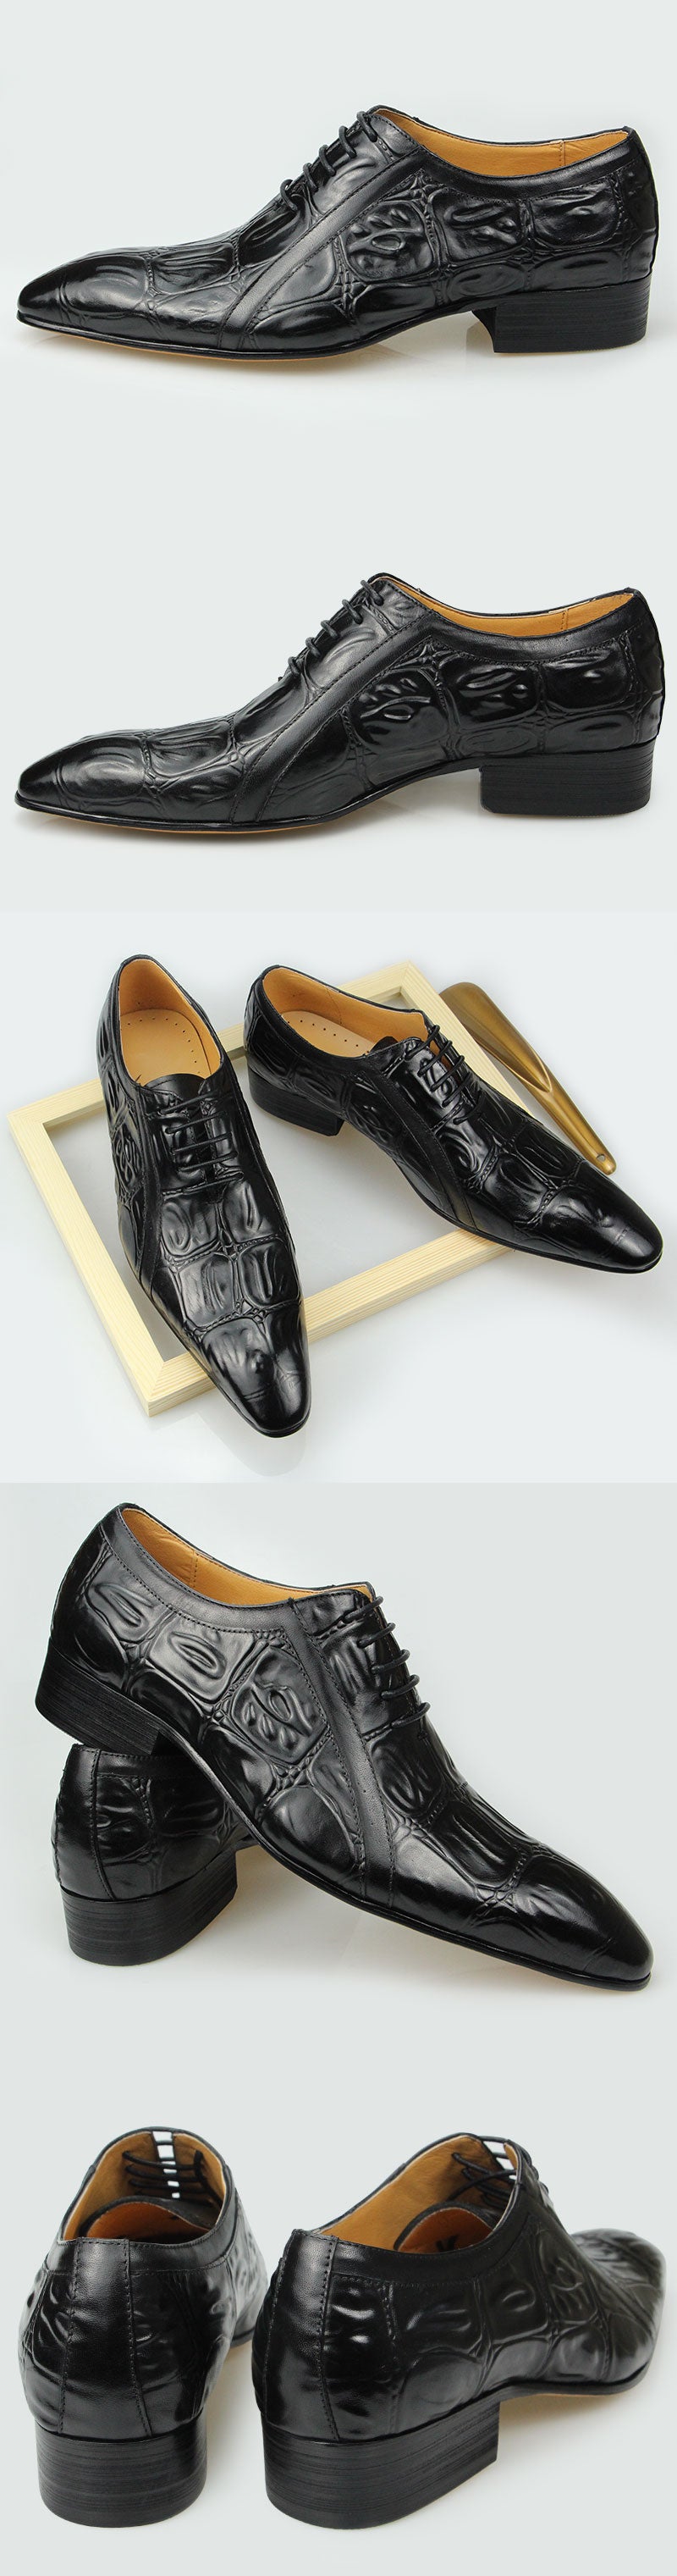 Ashour's Vampire Oxford - Men's Leather Dress Shoes